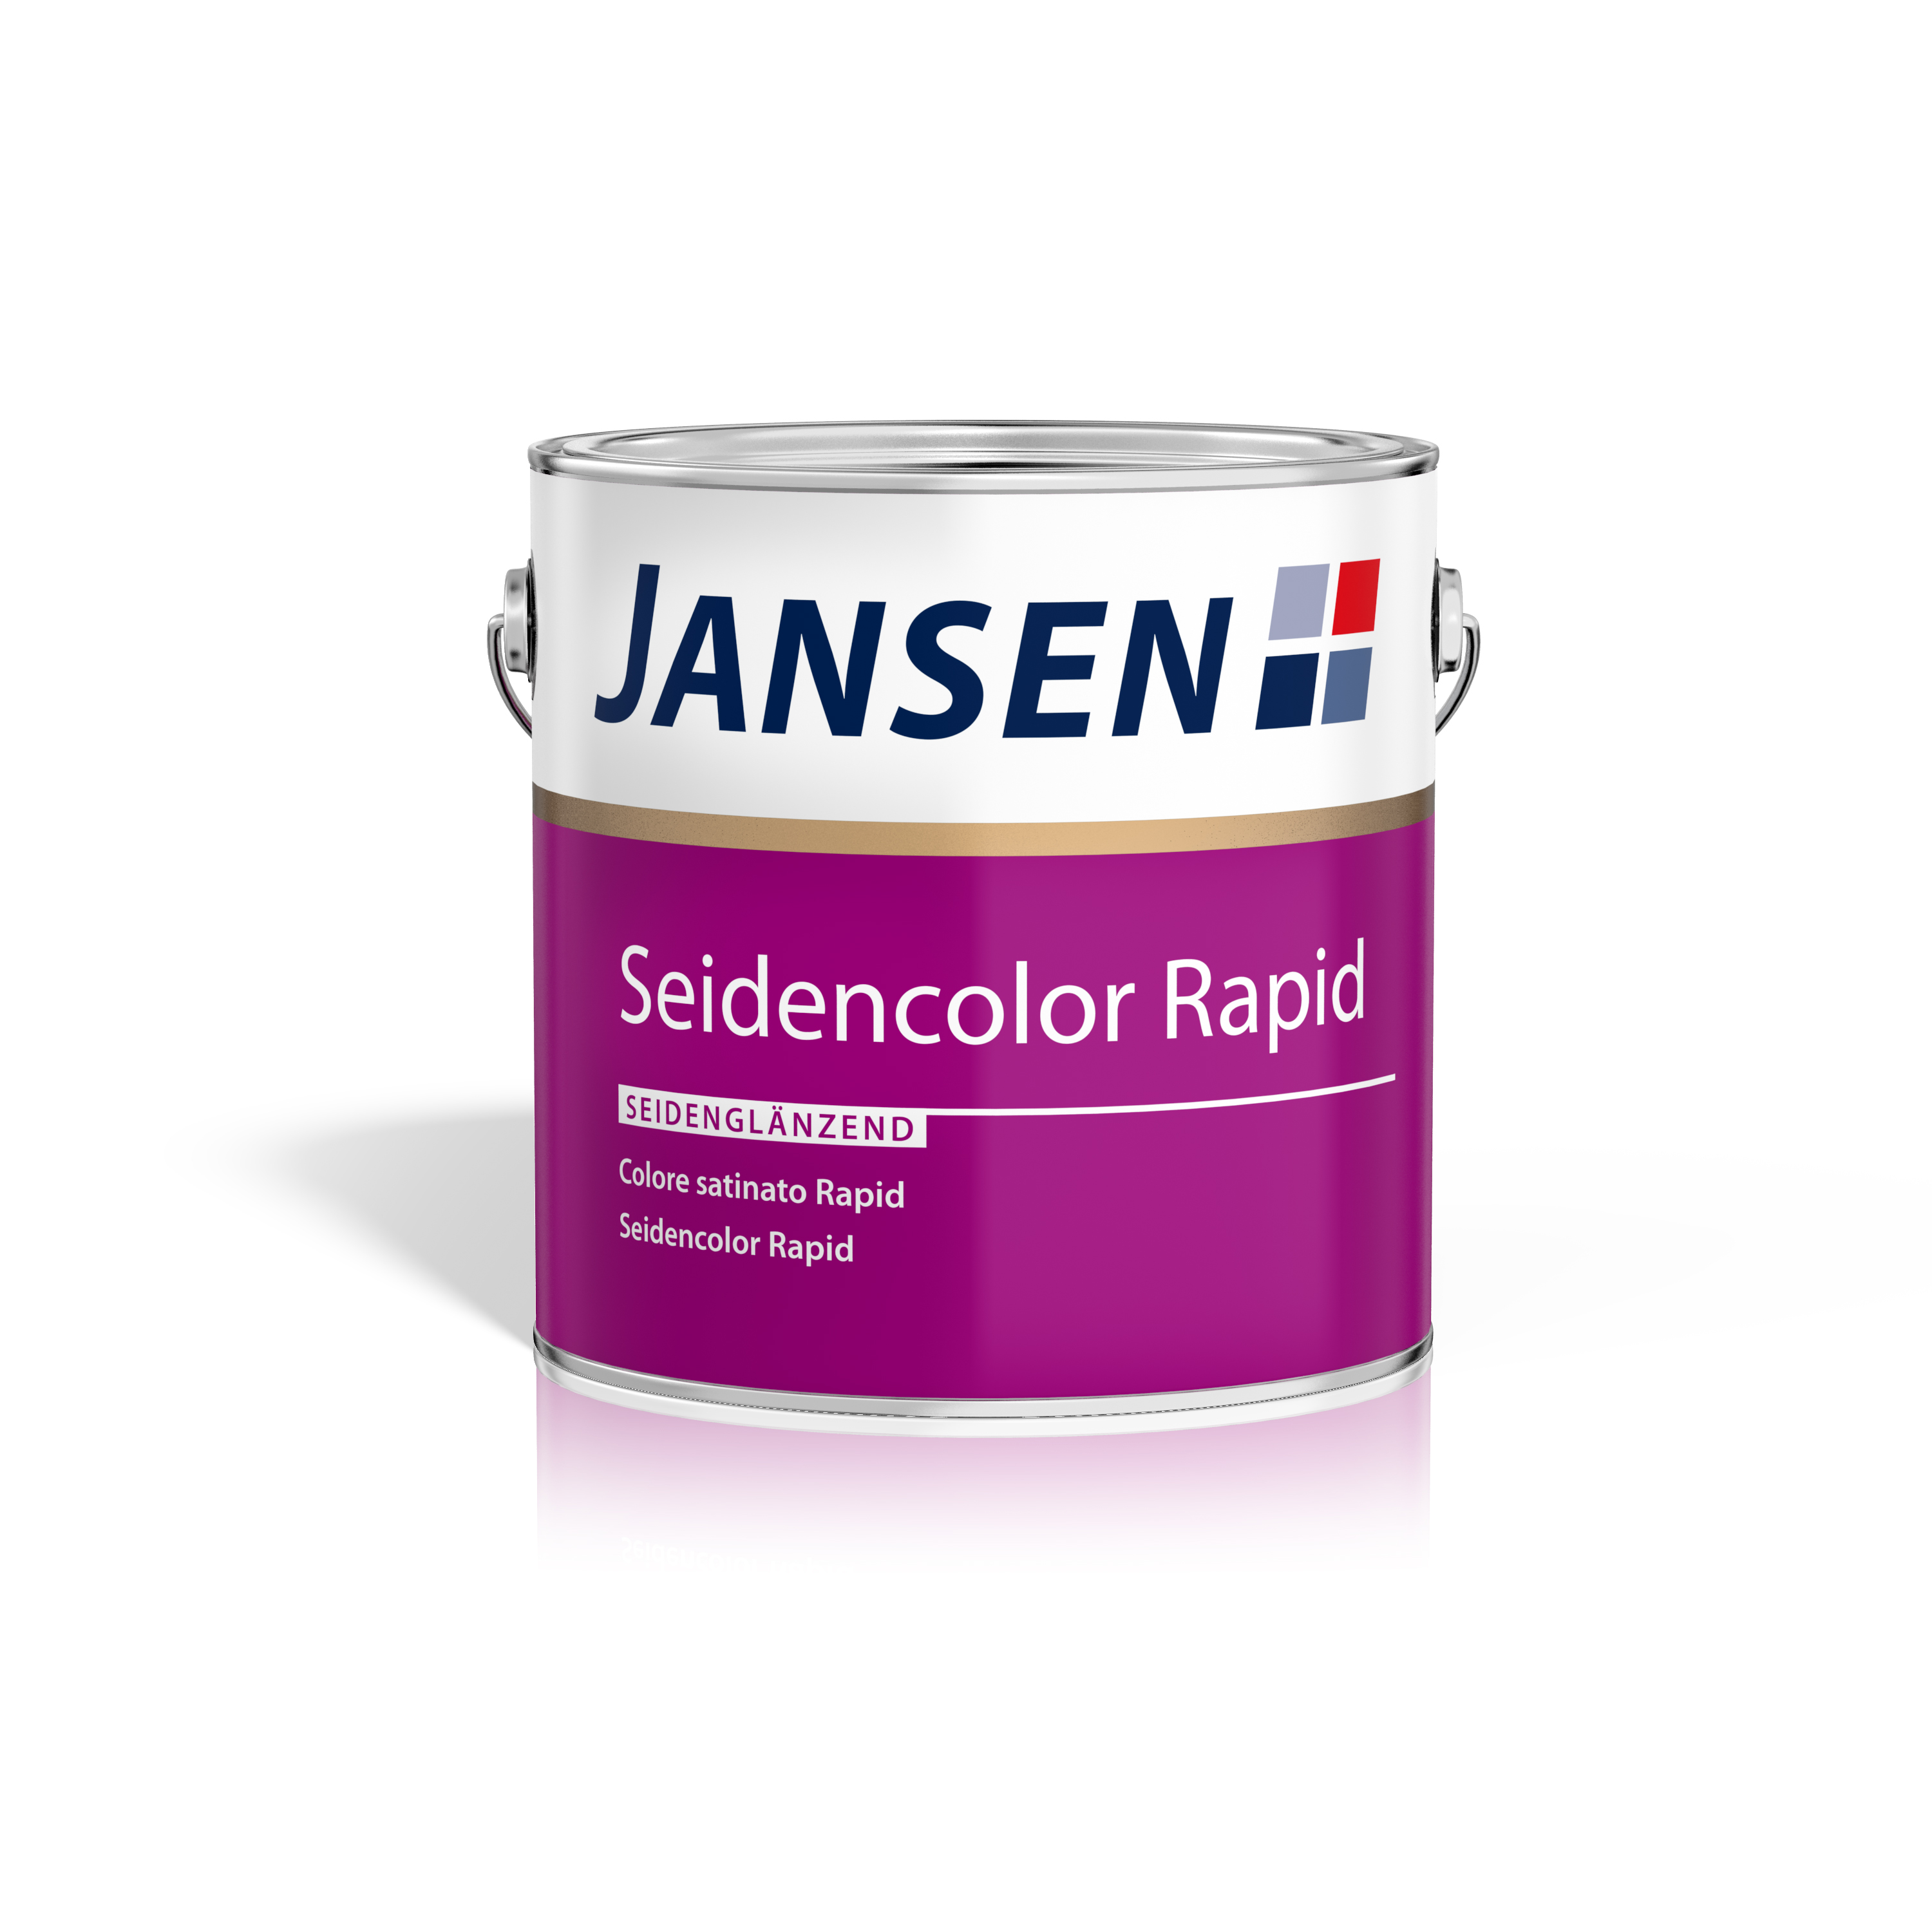 Jansen Seidencolor Rapid